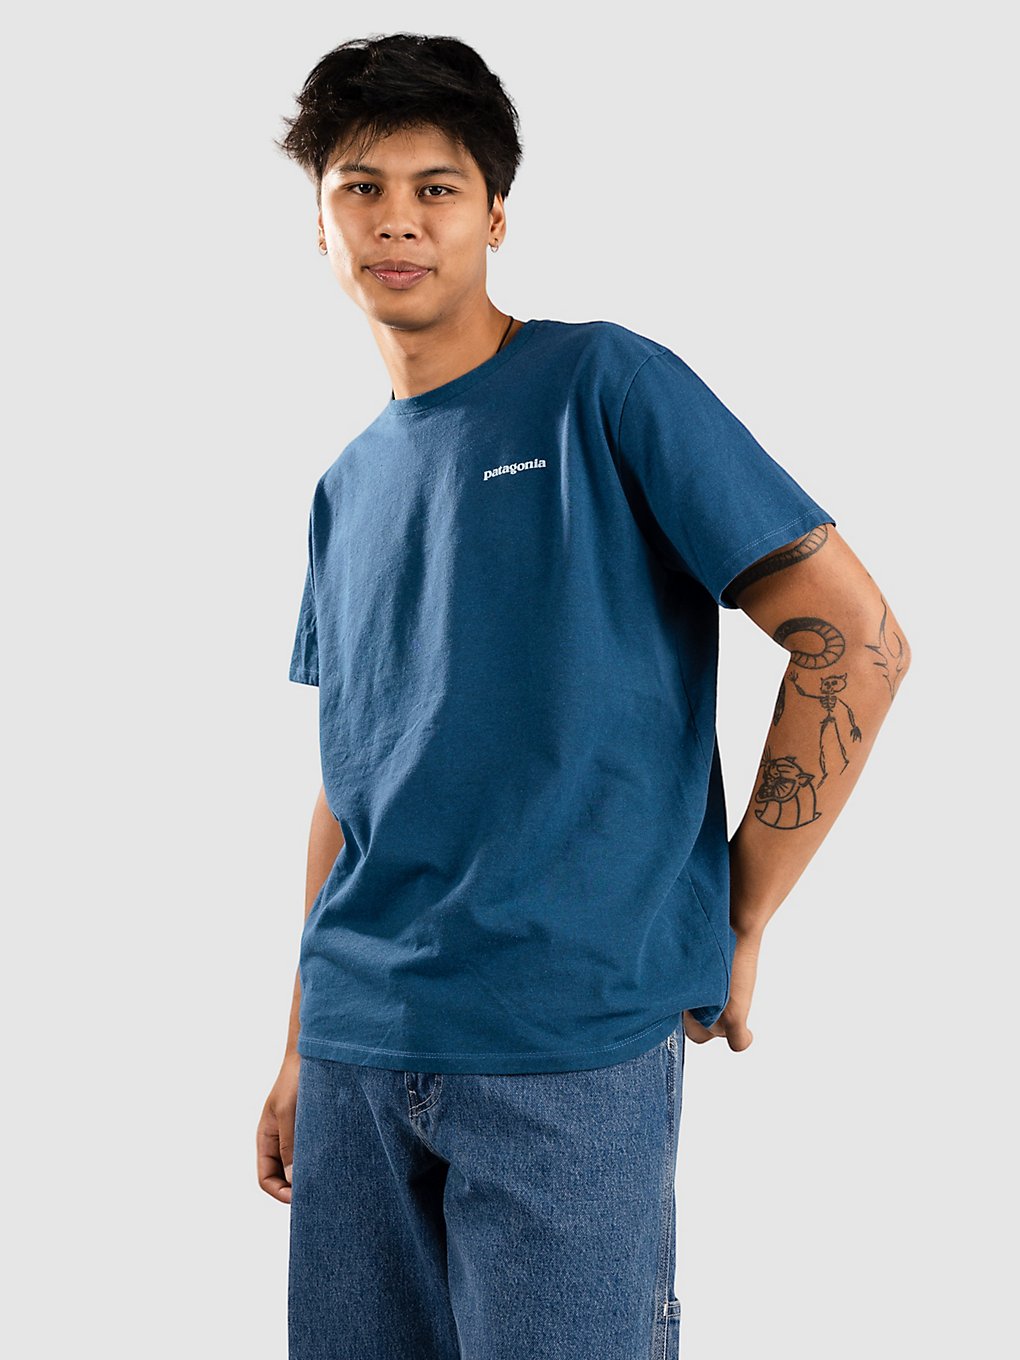 Patagonia Fitz Roy Icon Responsibili T-Shirt wavy blue kaufen